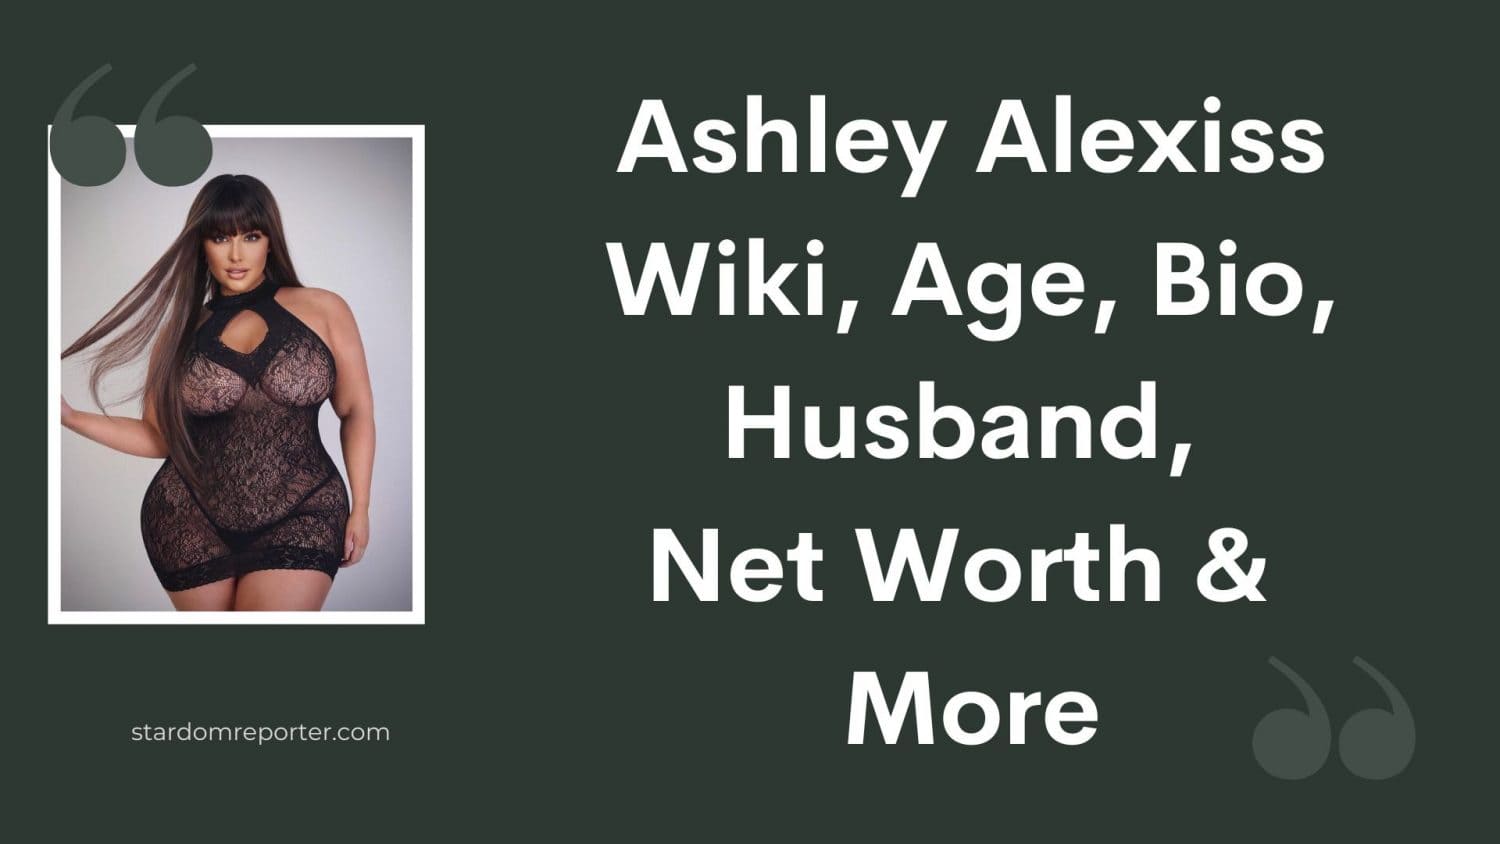 Ashley Alexiss Wiki, Age, Bio, Husband, Net Worth & More - 17